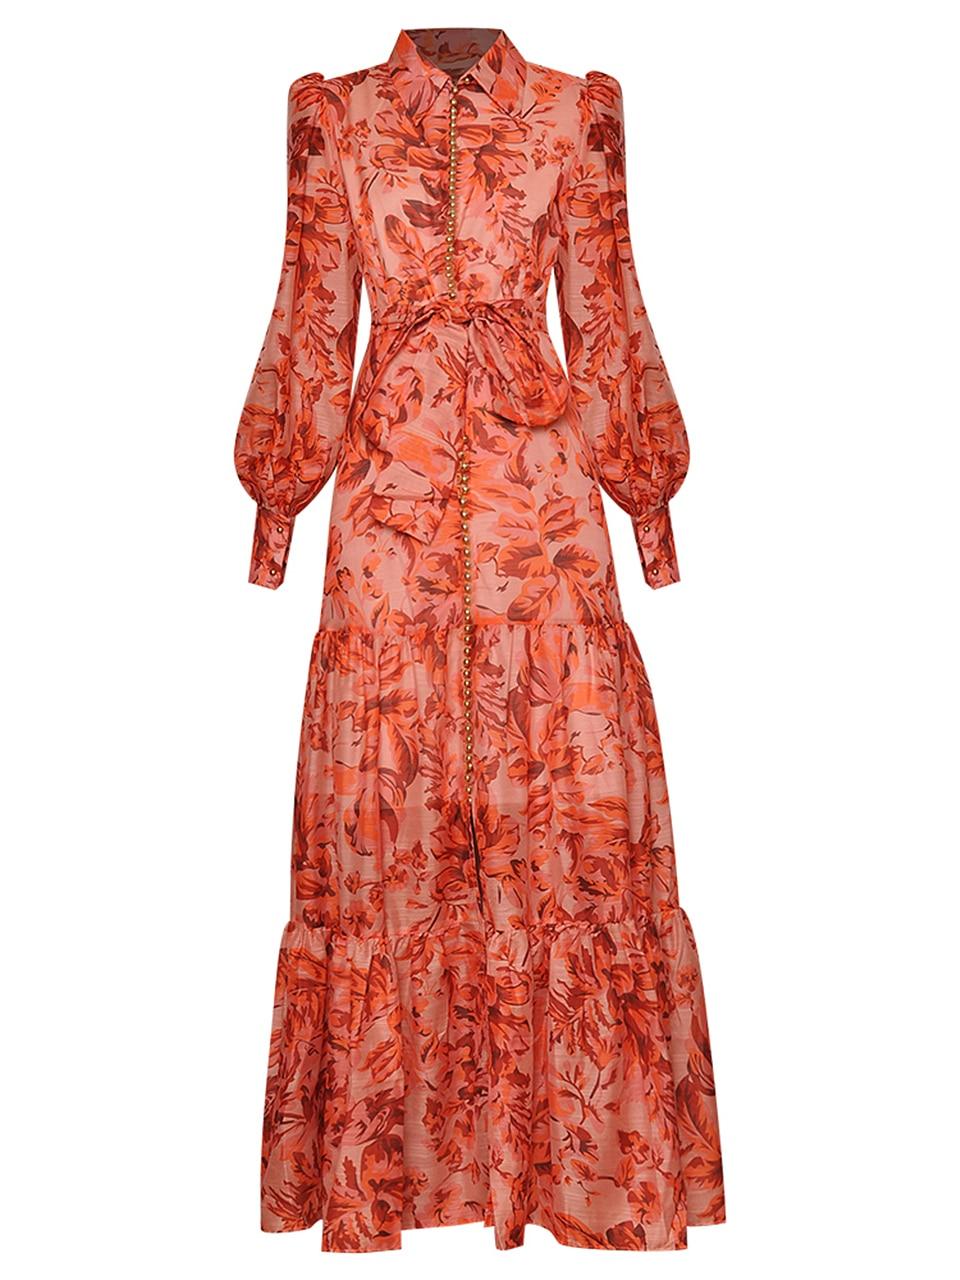 DIDACHARM High Quality Long Dress Fashion Spring New Women'S Vintage Elegant Lapel Long Sleeve Button Printing Party Dresses